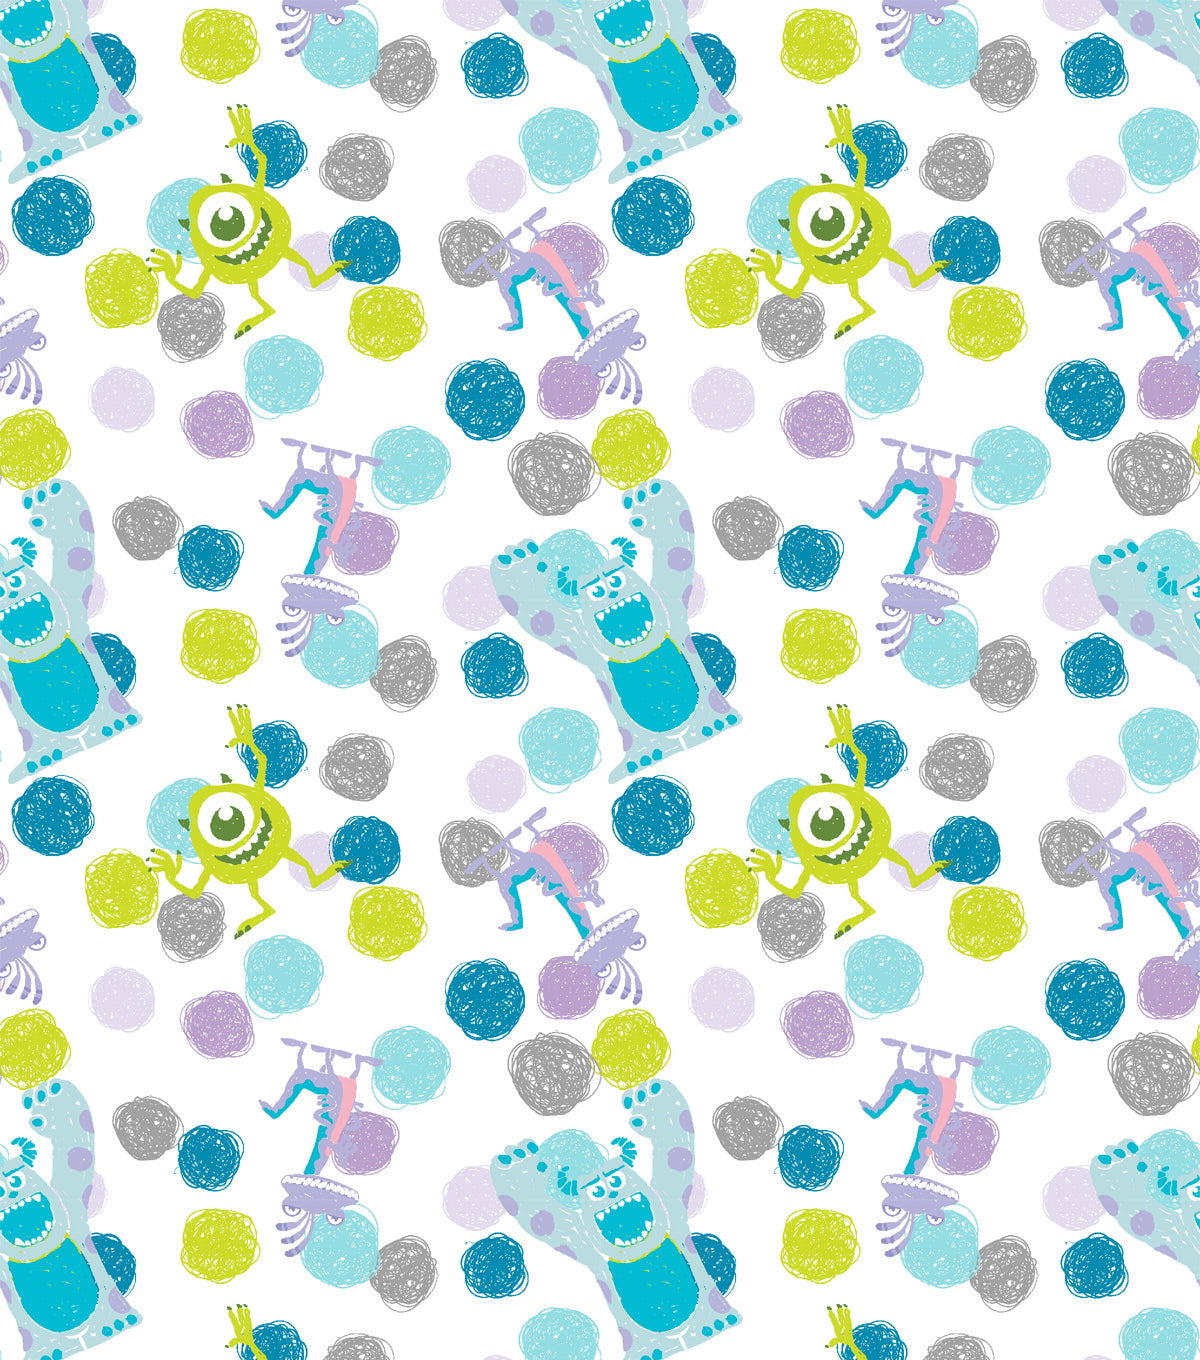 Disney & Pixar Monsters Inc. Polka Dot Fabric